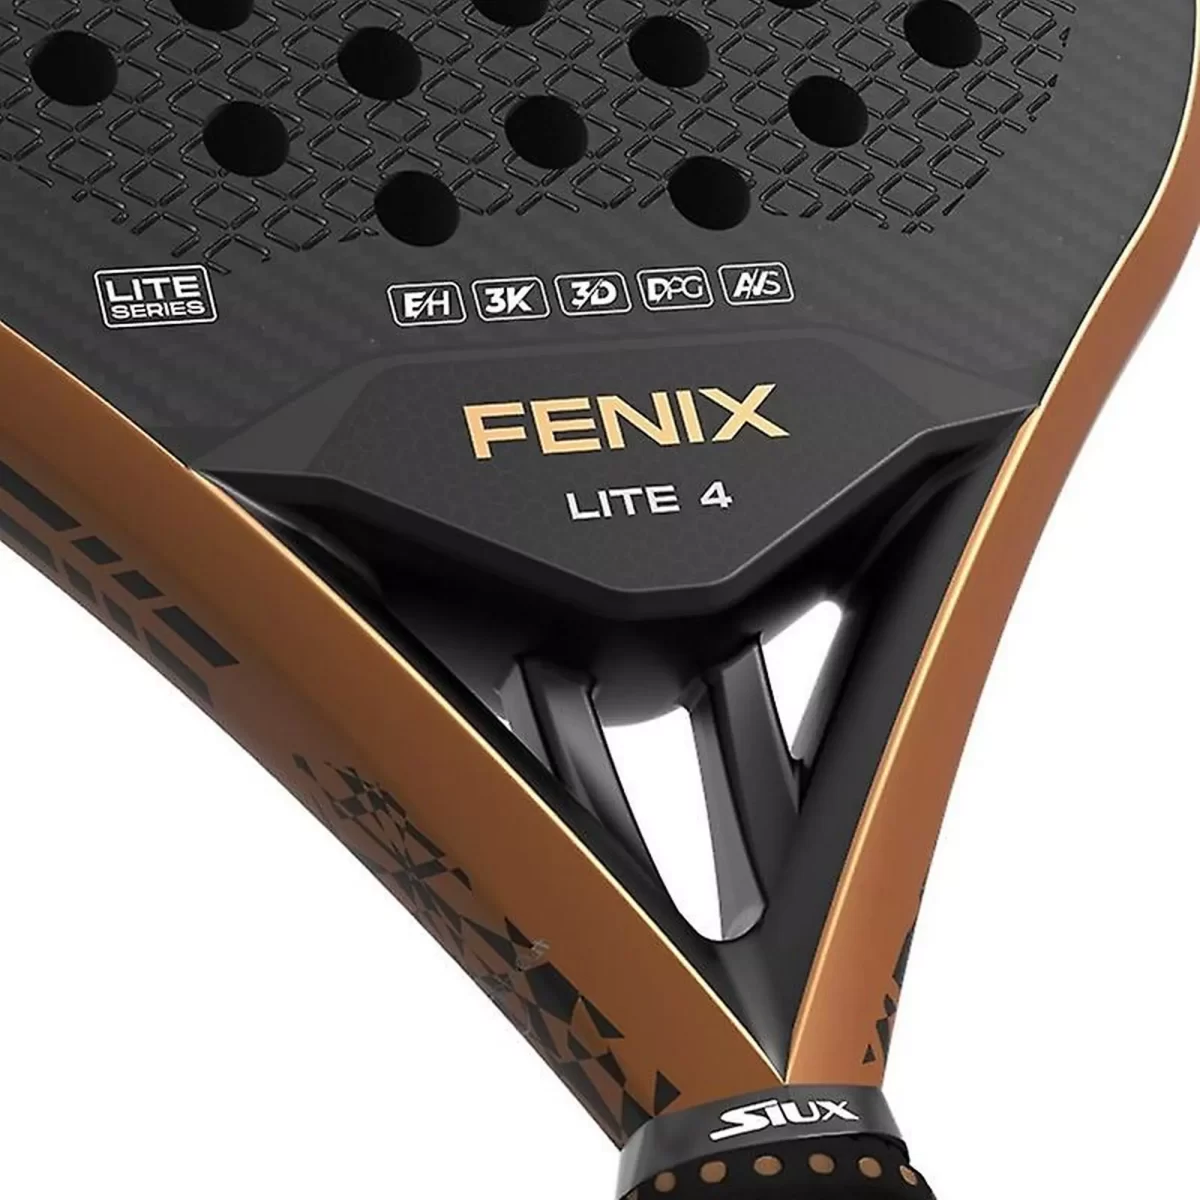 SIUX Padel Racket Fenix Lite 4 2024